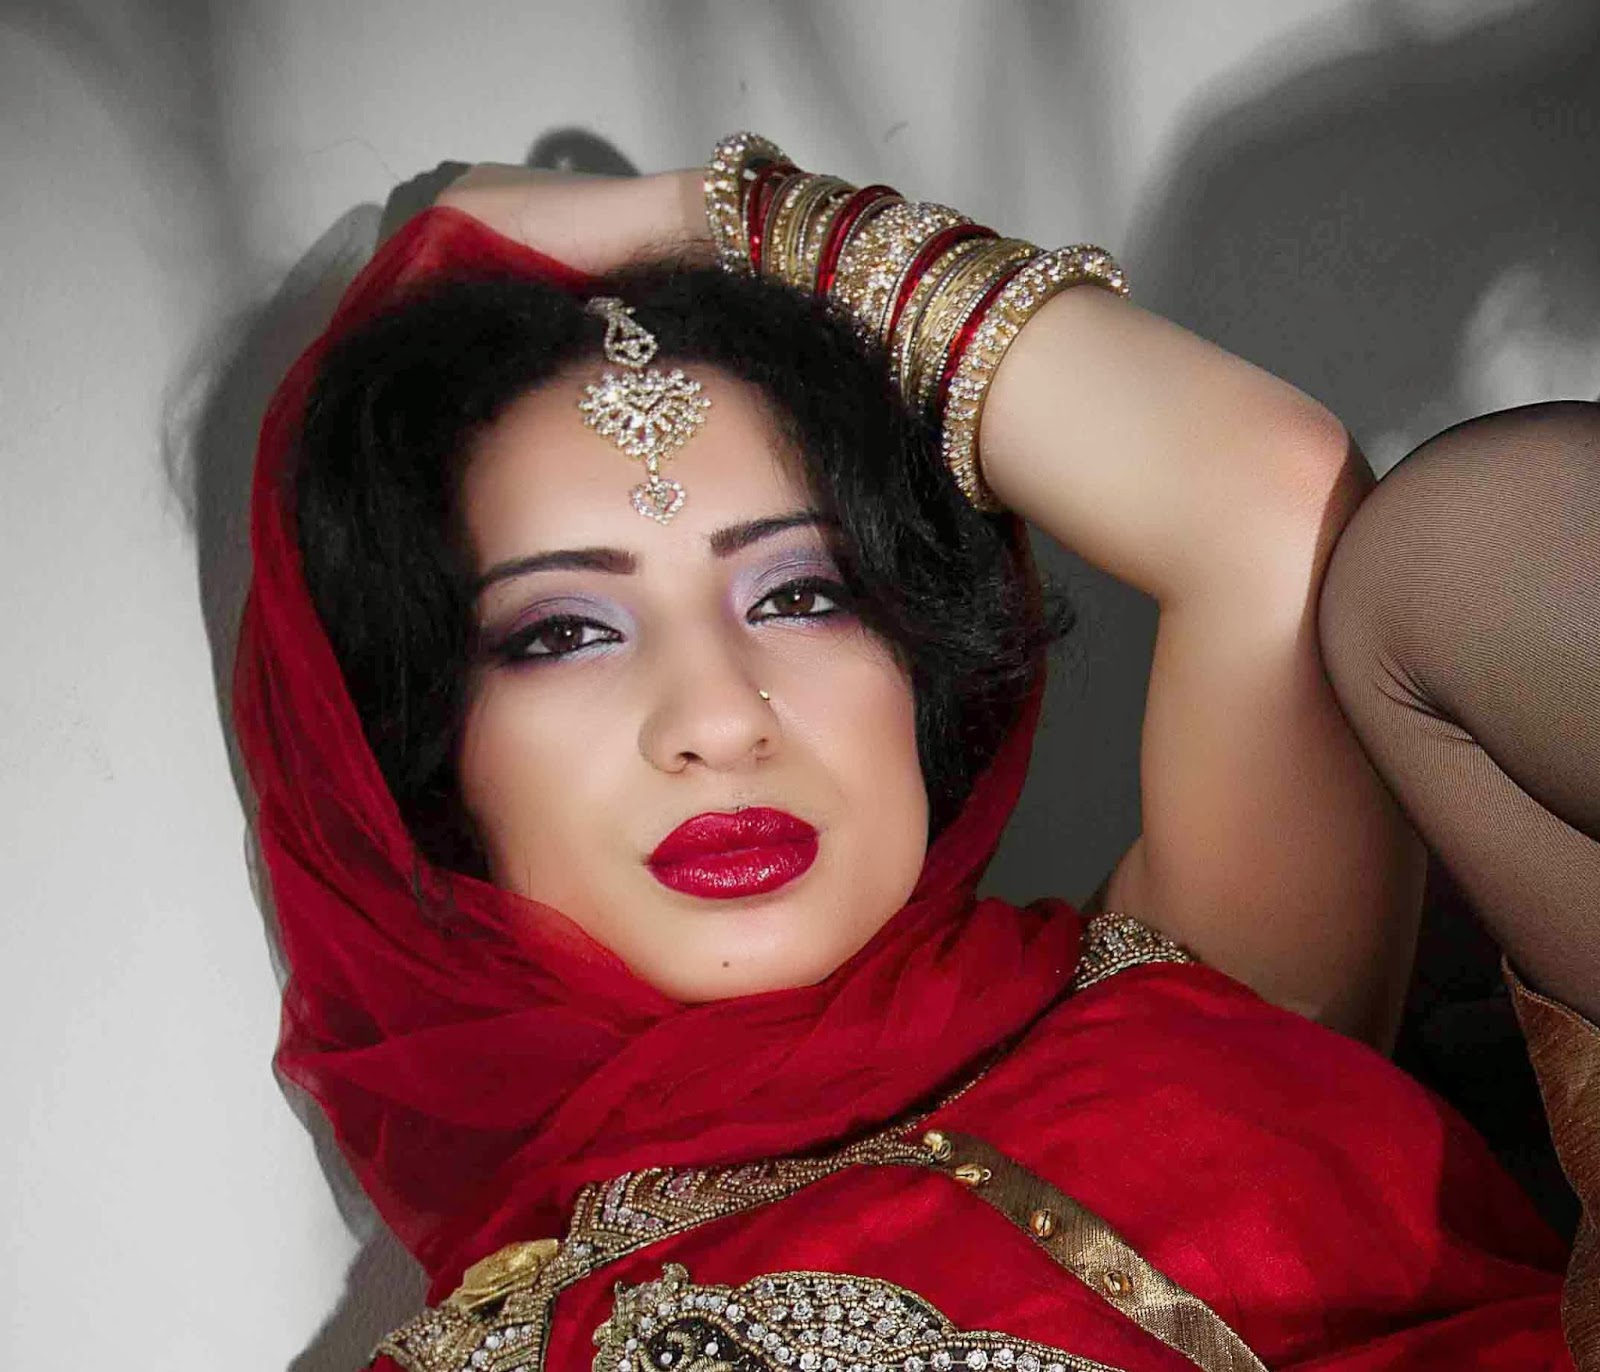 Shanti Dynamite Porn - Latest News On Indian Celebrities: Porn star Shanti Dynamite got her  nipples pierced